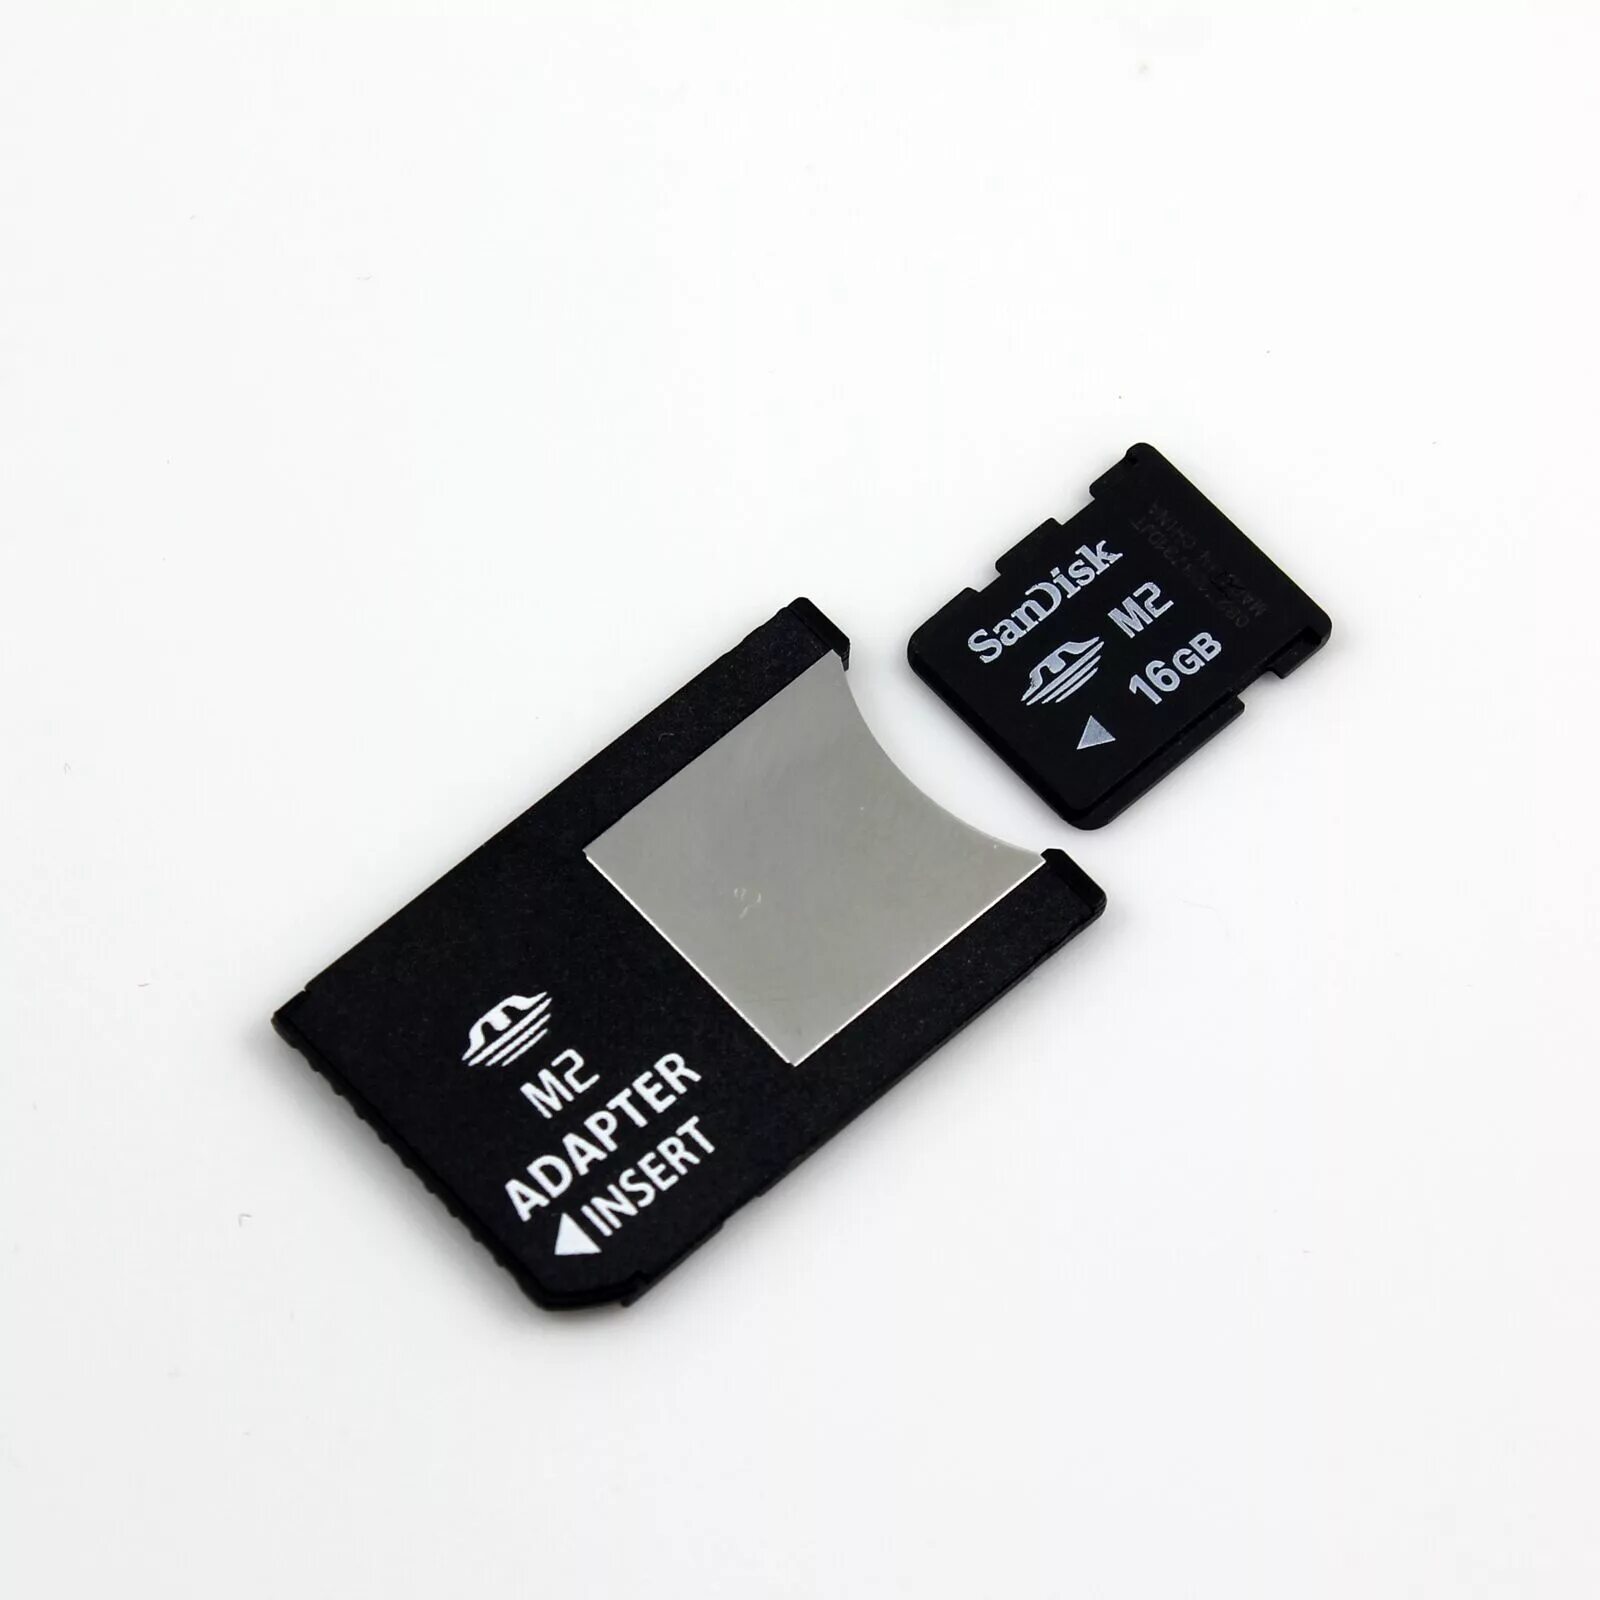 Адаптер для микро SD В m2 Sony. Адаптер карты памяти Sony m2 USB. Переходник на карту памяти MICROSD на Sony m2. M2 Sony флешка.